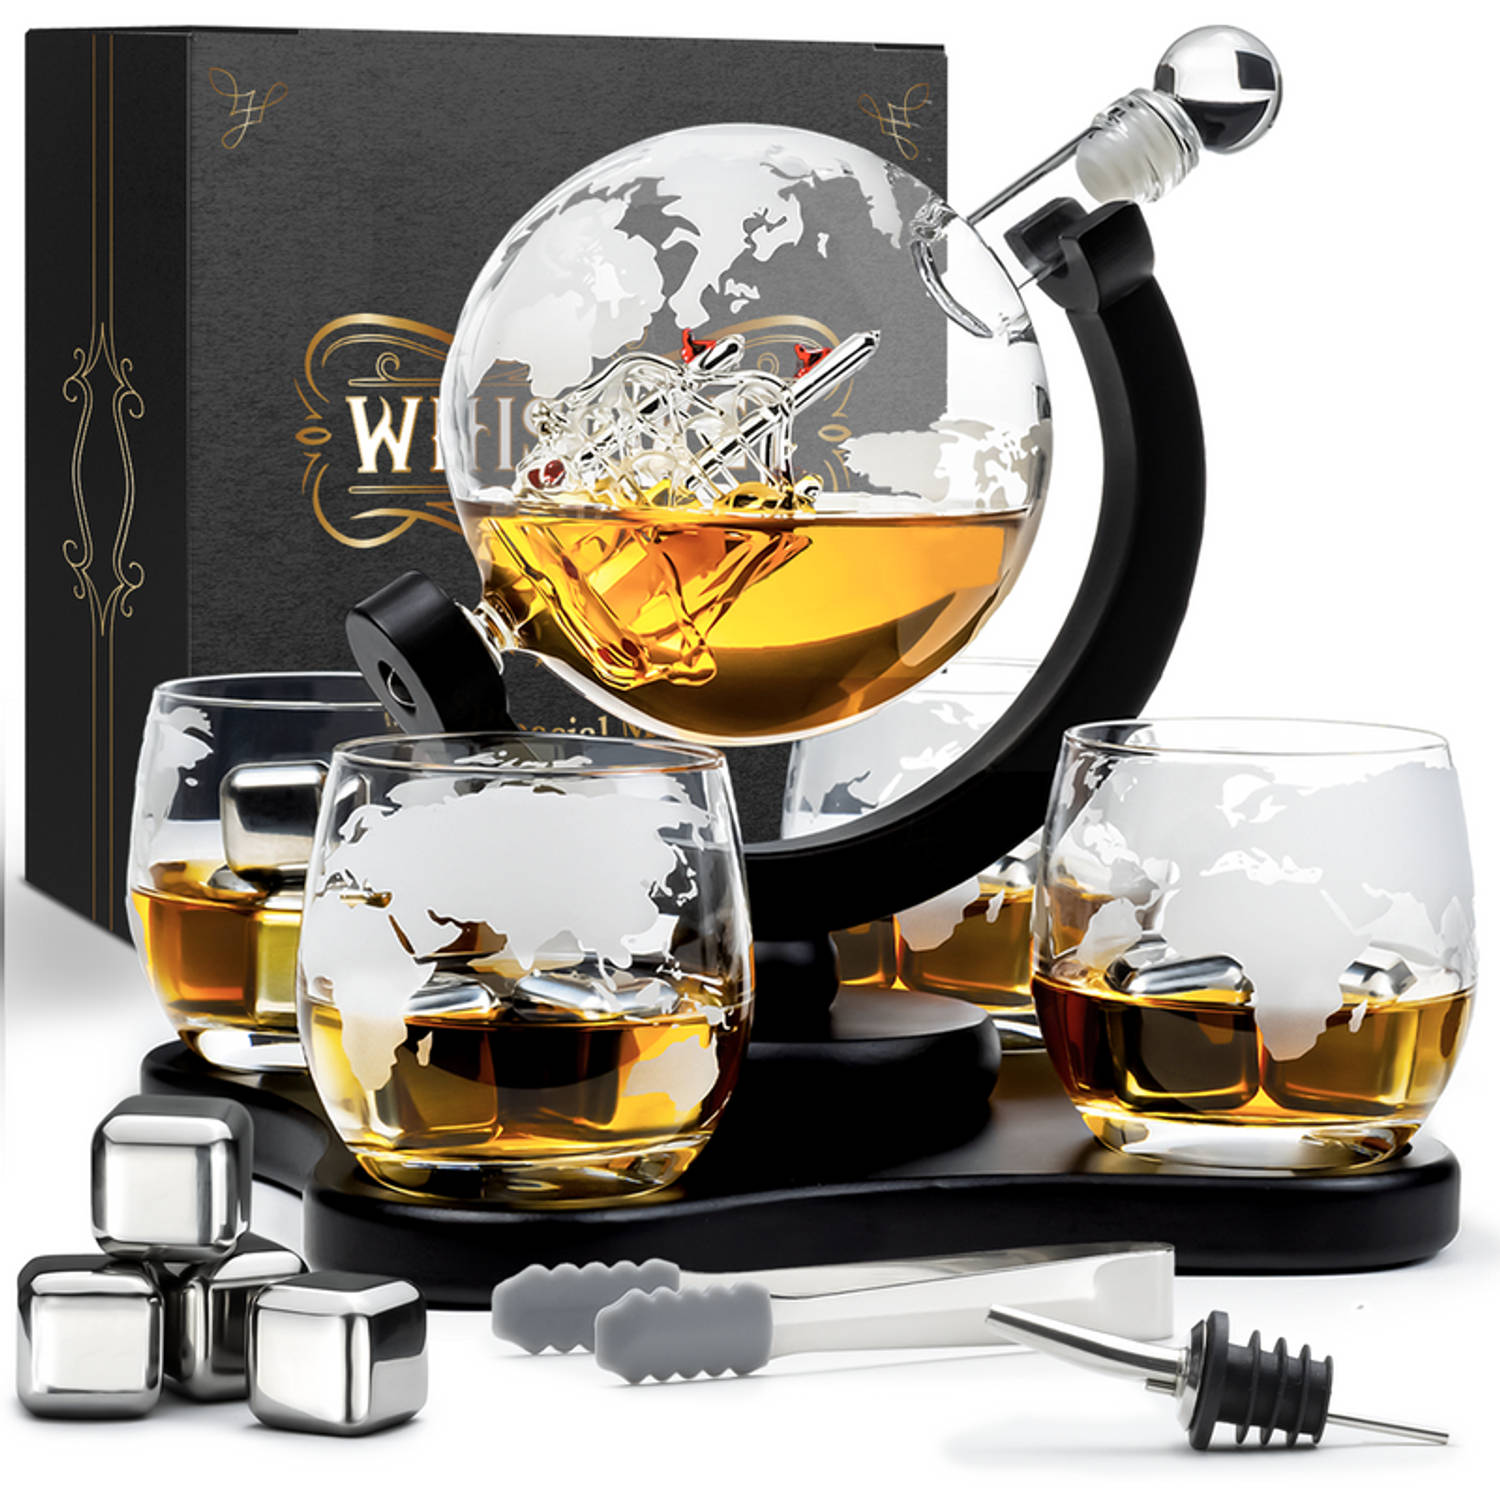 Whisiskey Whiskey Karaf Wereldbol Luxe Whisky Karaf Set 0,9 L Decanteer Karaf Incl. Accessoires